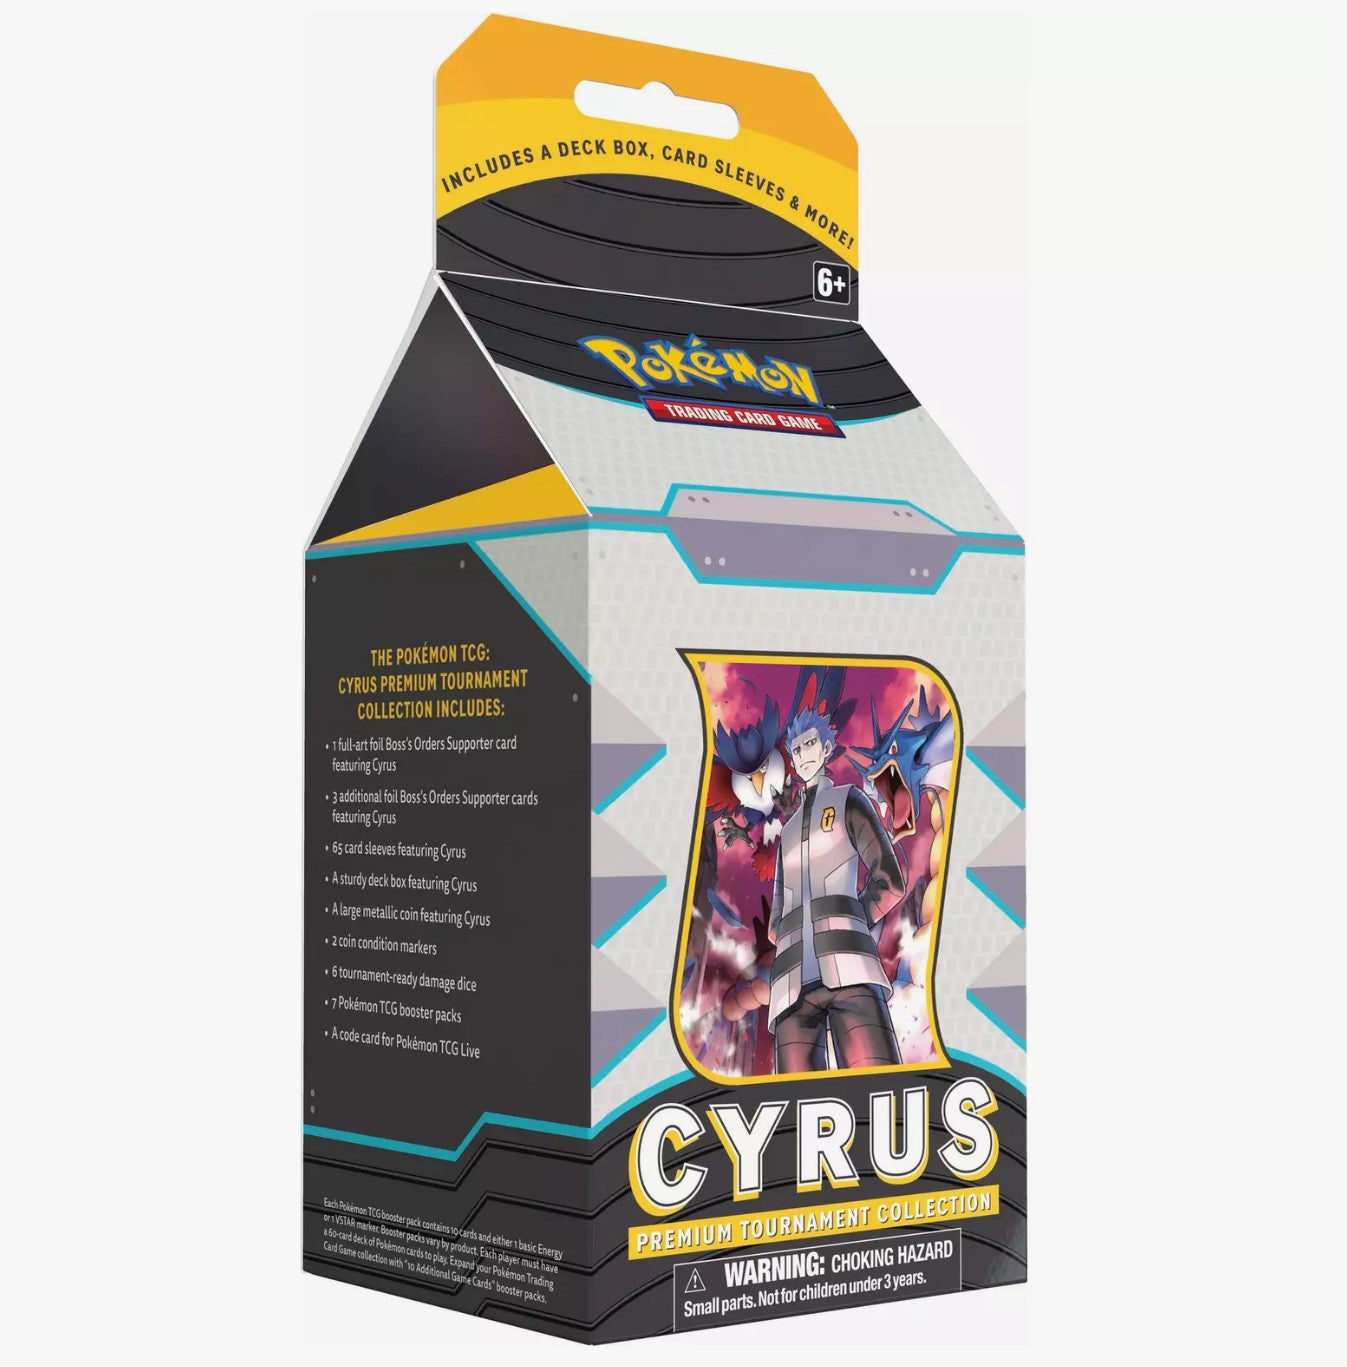 Cyrus/Klara Premium Tournament Collection (Select option)